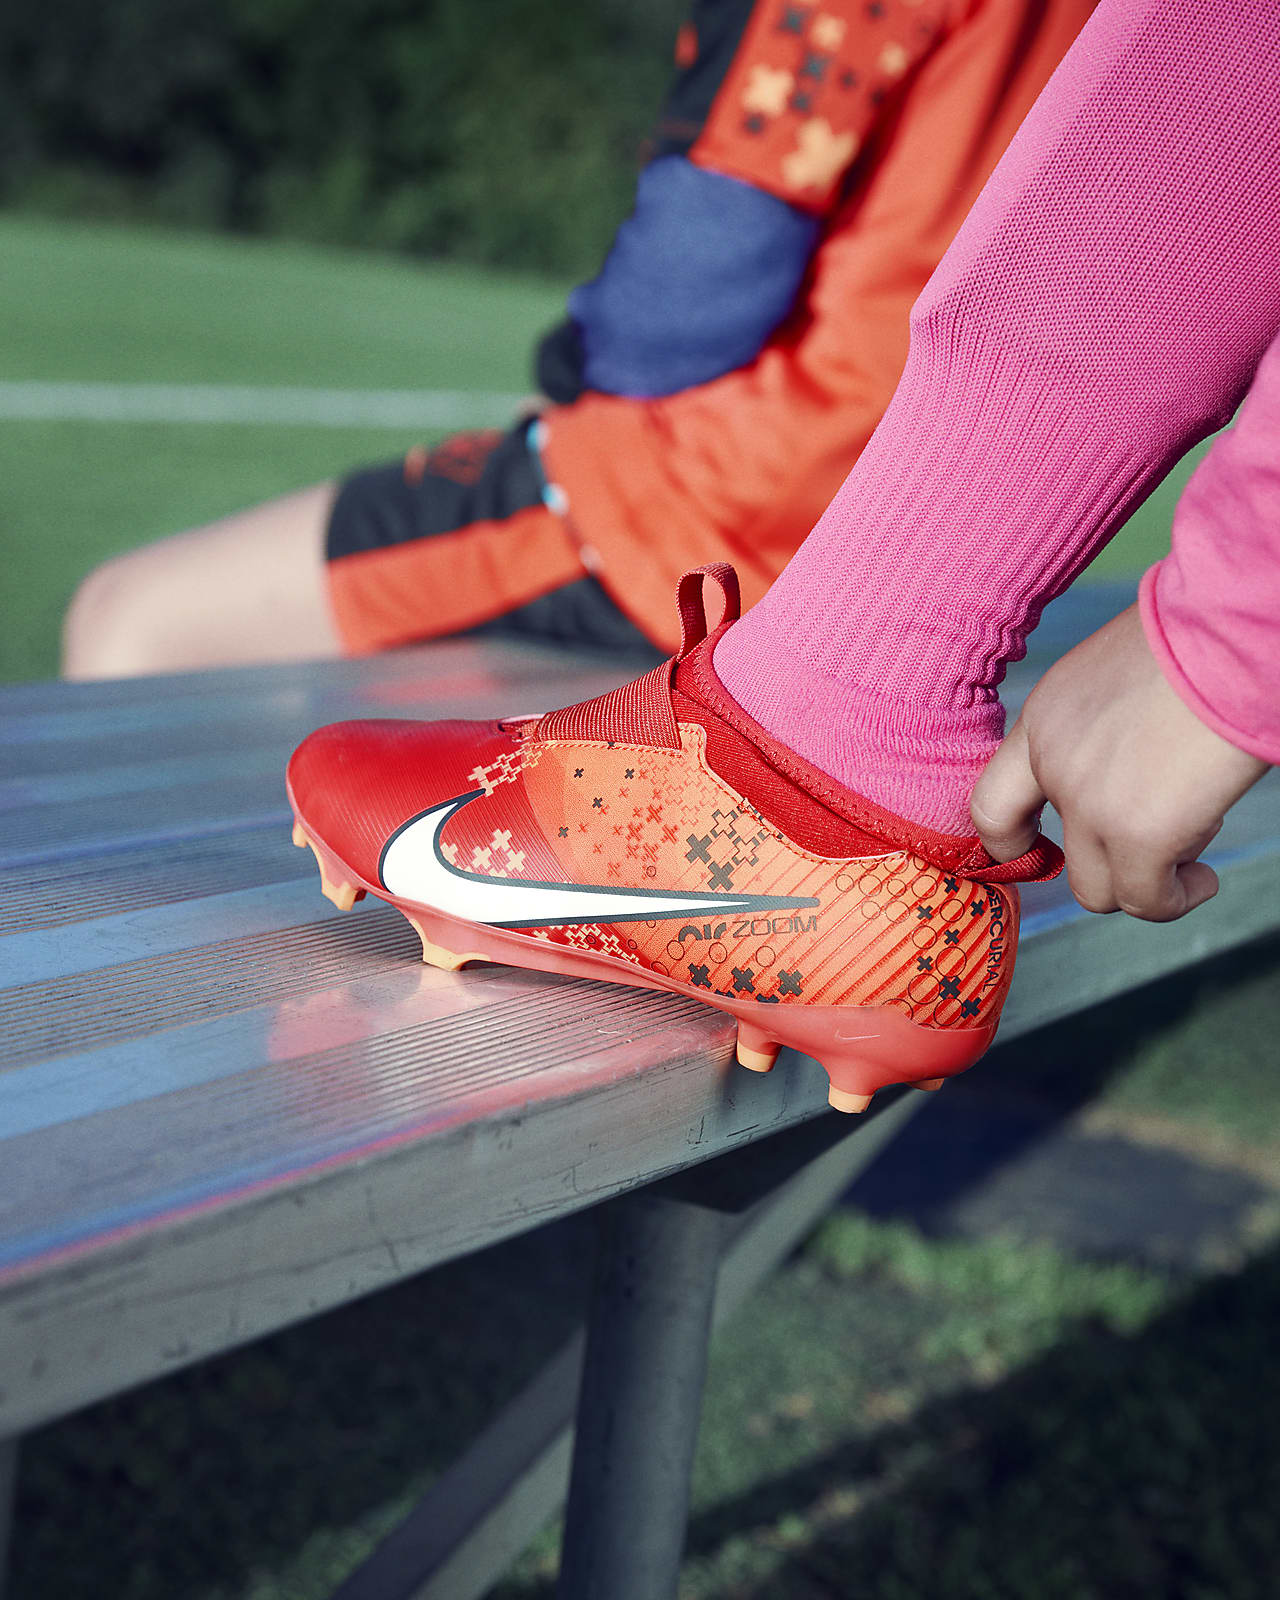 Chaussures football zoom vapor 15 mg argenté enfant - Nike